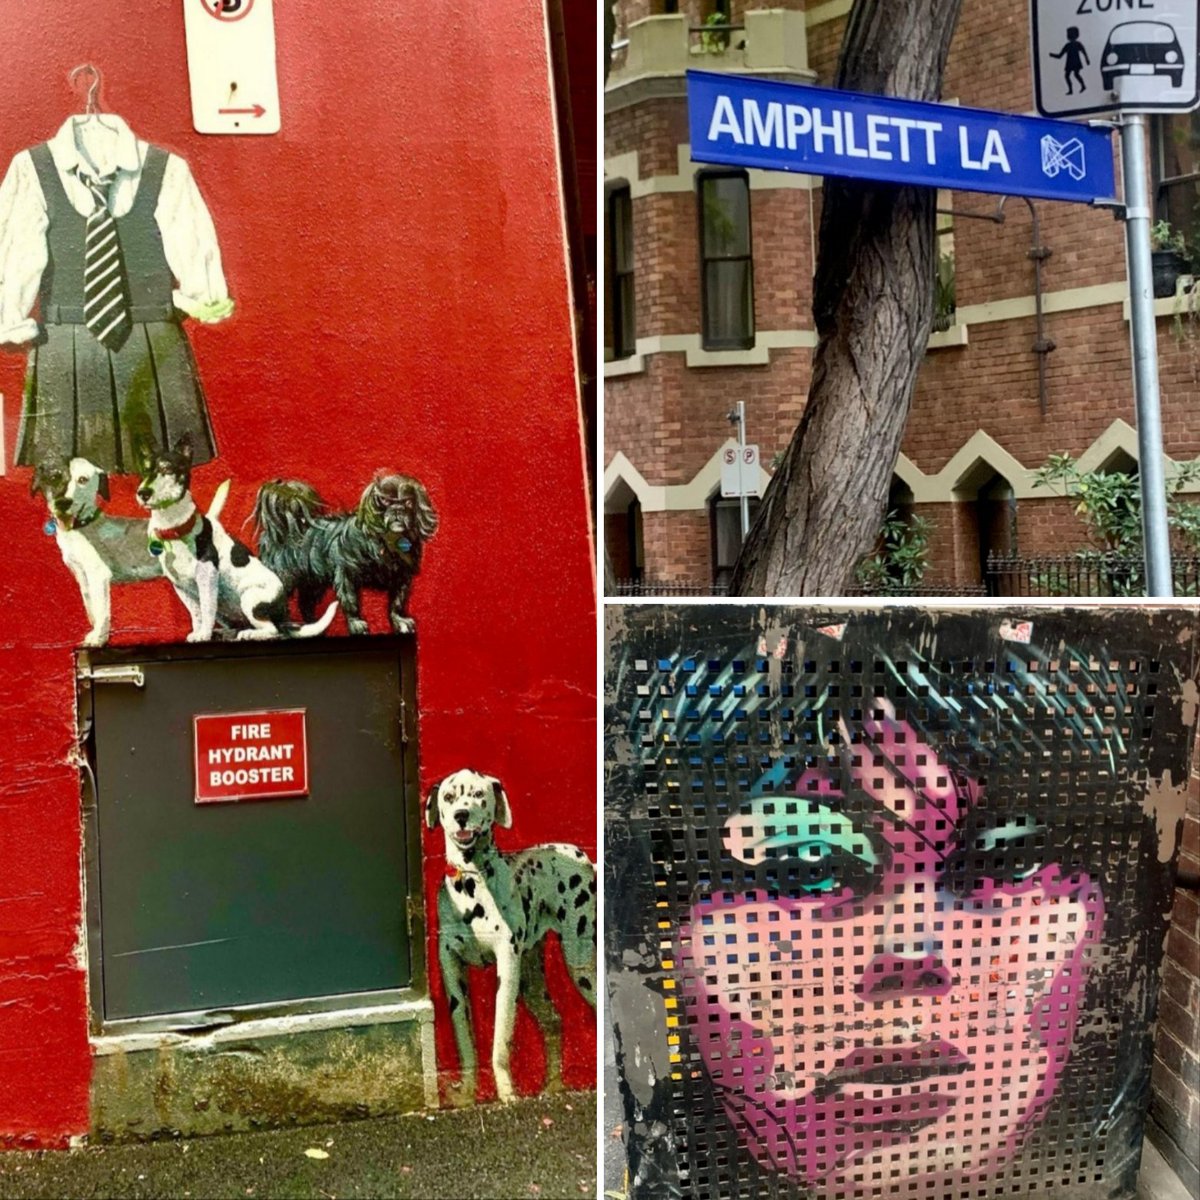 Photos of Amphlett Lane taken in Melbourne this week by Mark Hopper Photography 😊👍 #chrissyamphlett #amphlettlane #melbourne #divinyls #aussiemusic #streetart #melbournelaneways